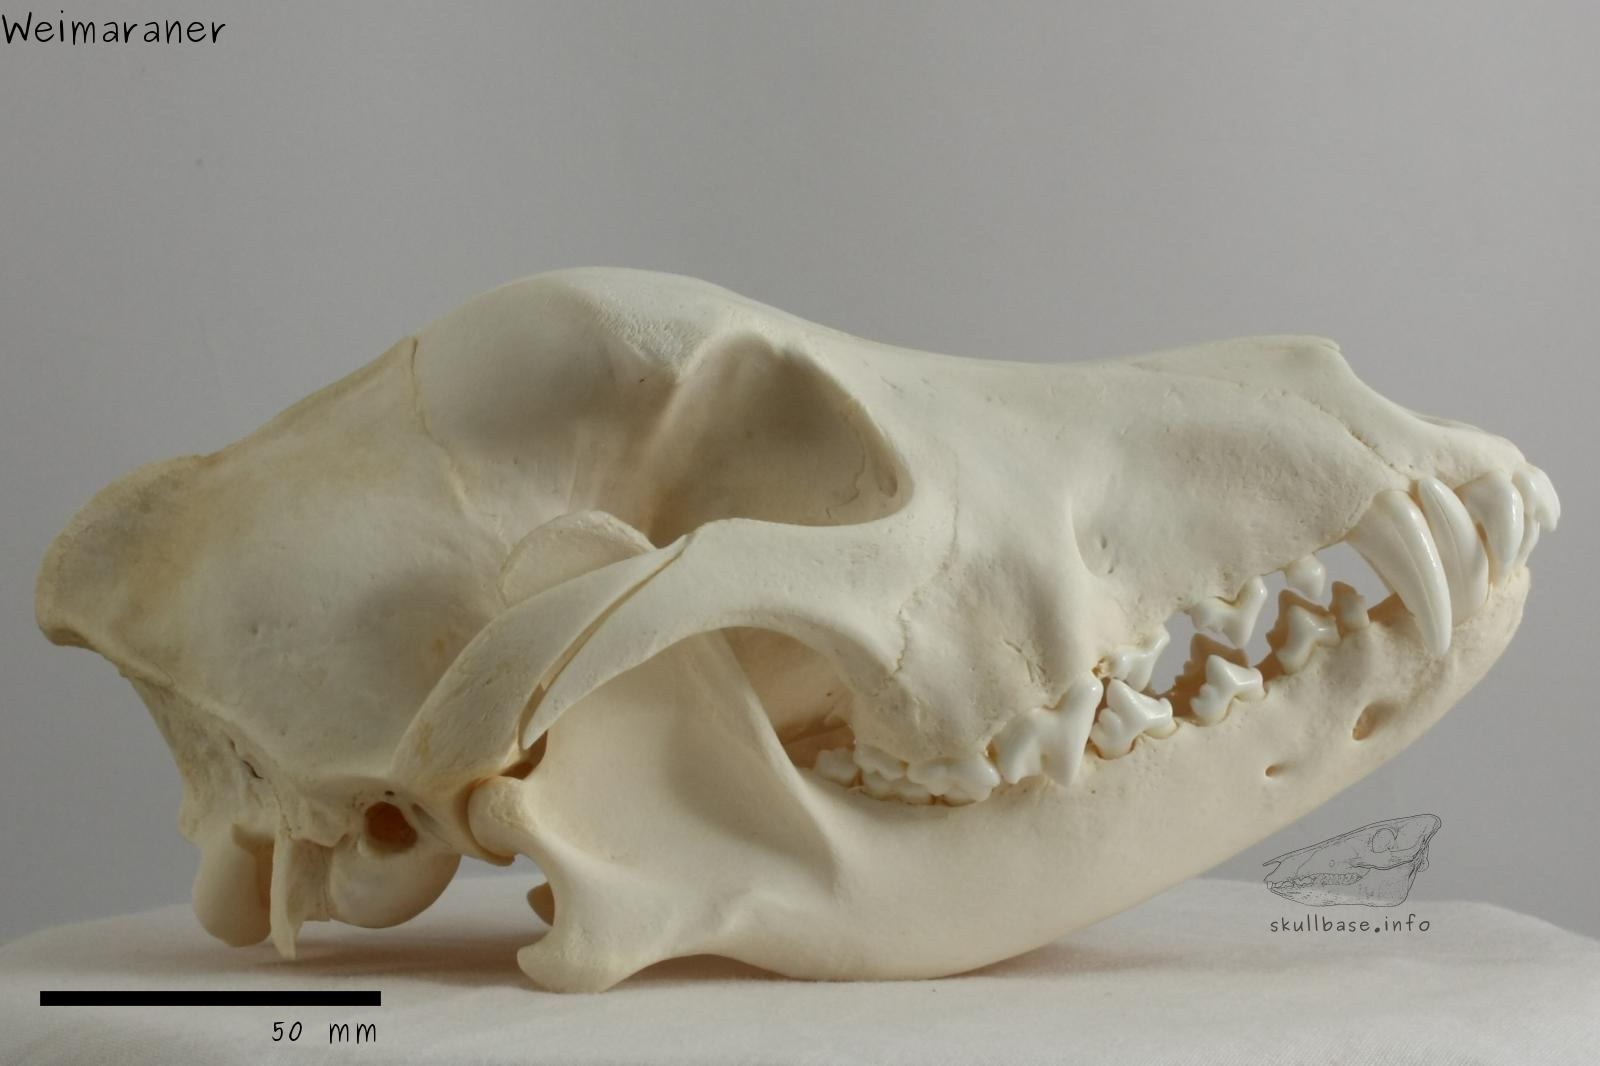 Weimaraner (Canis lupus familiaris) skull lateral view